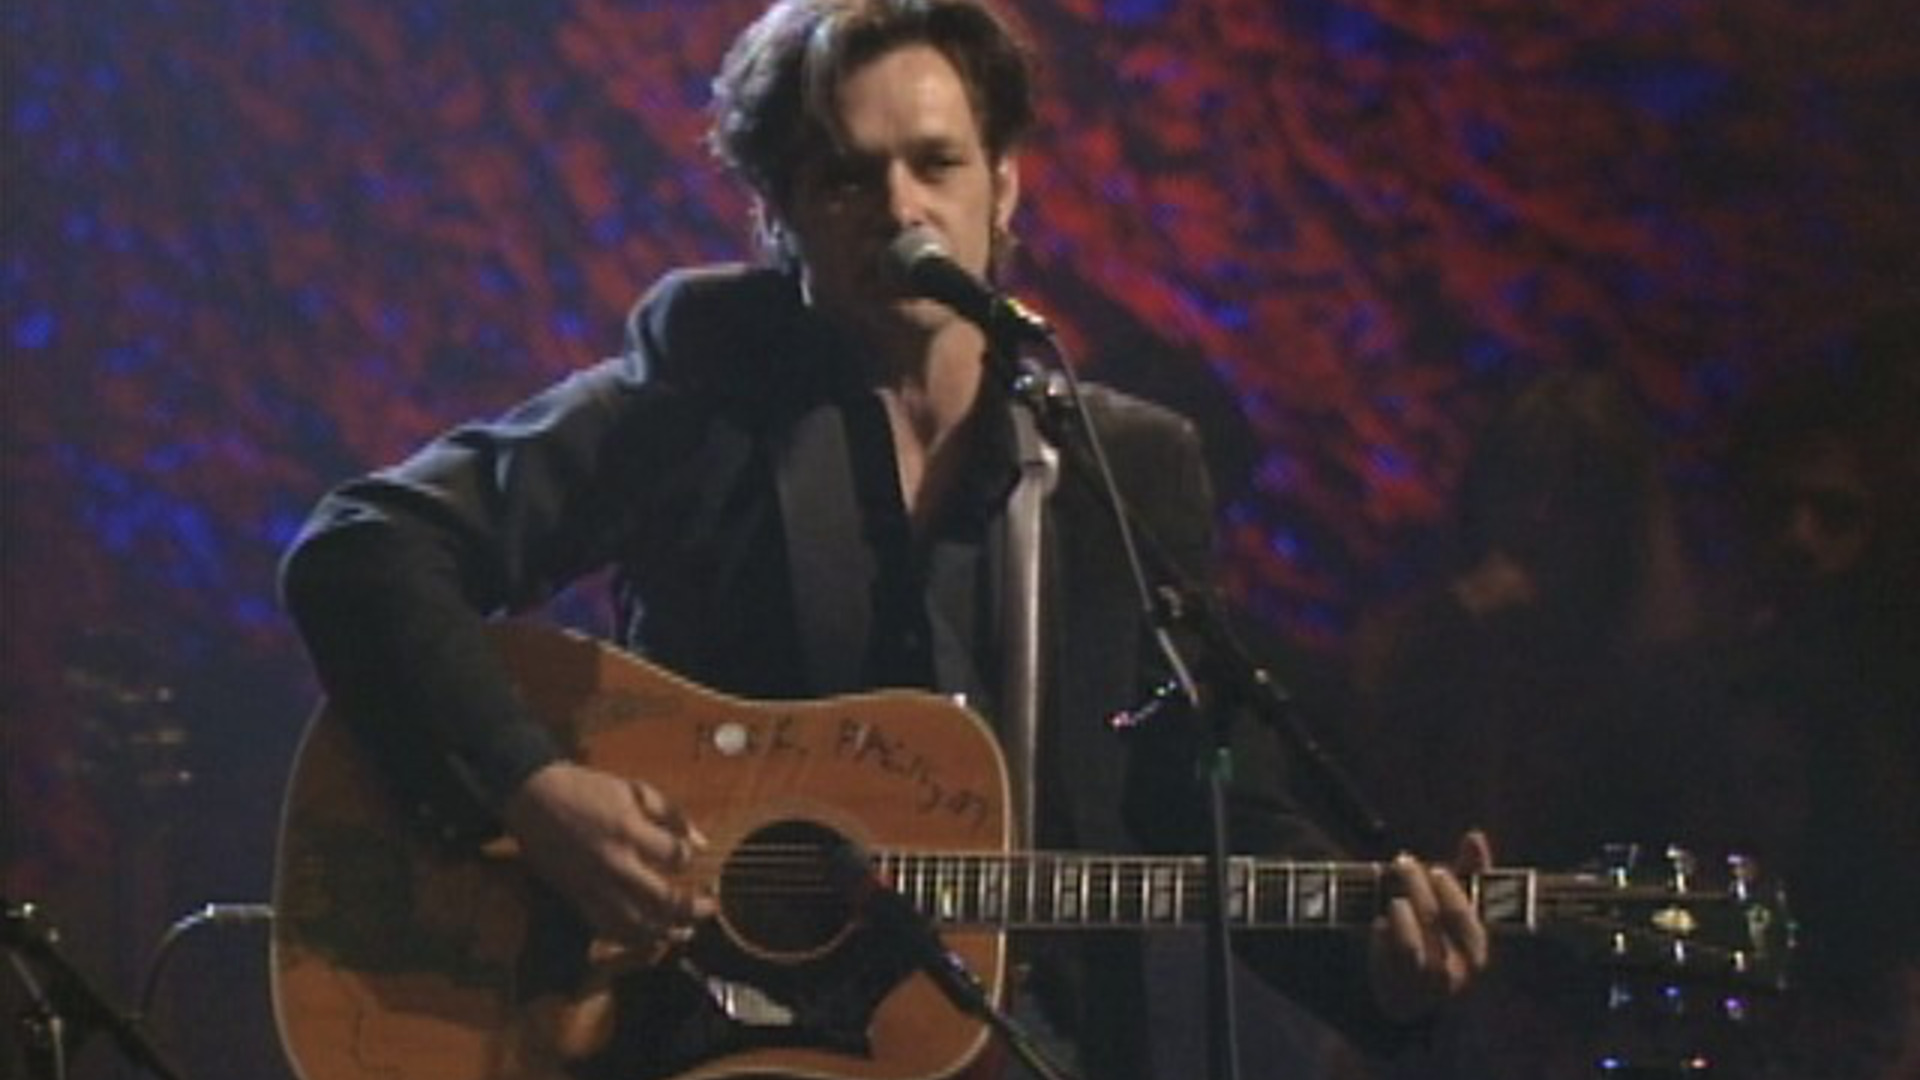 Watch MTV Unplugged Season 1 Episode 4: John Mellencamp Unplugged show on Paramount Plus